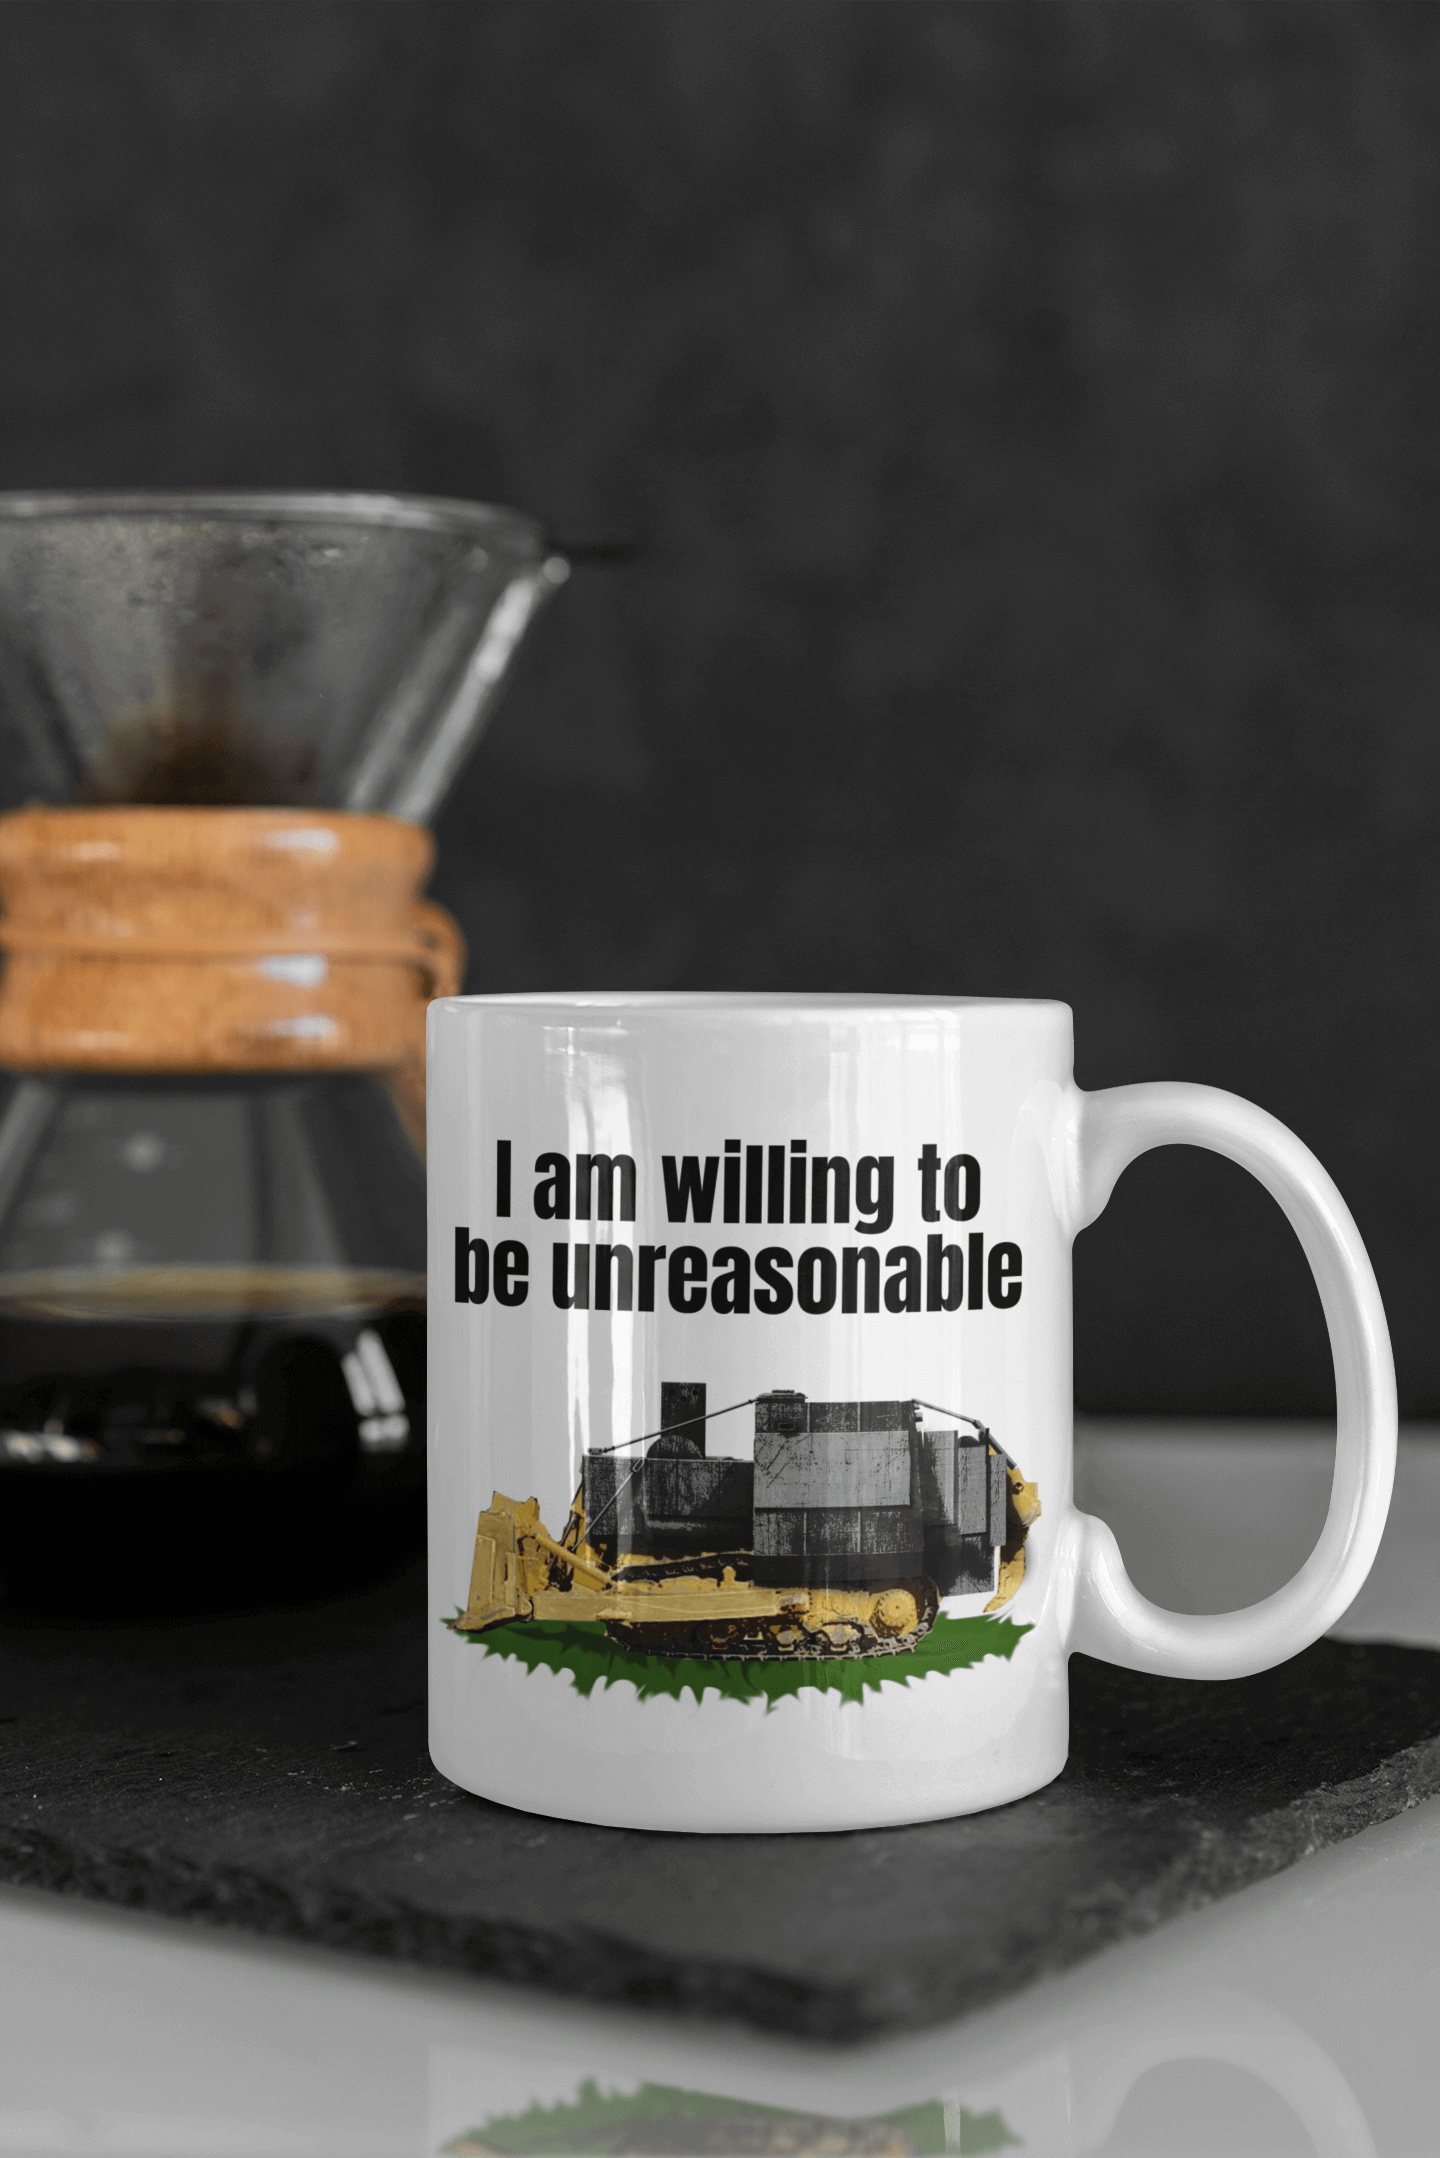 I am willing to be unreasonable - White glossy mug